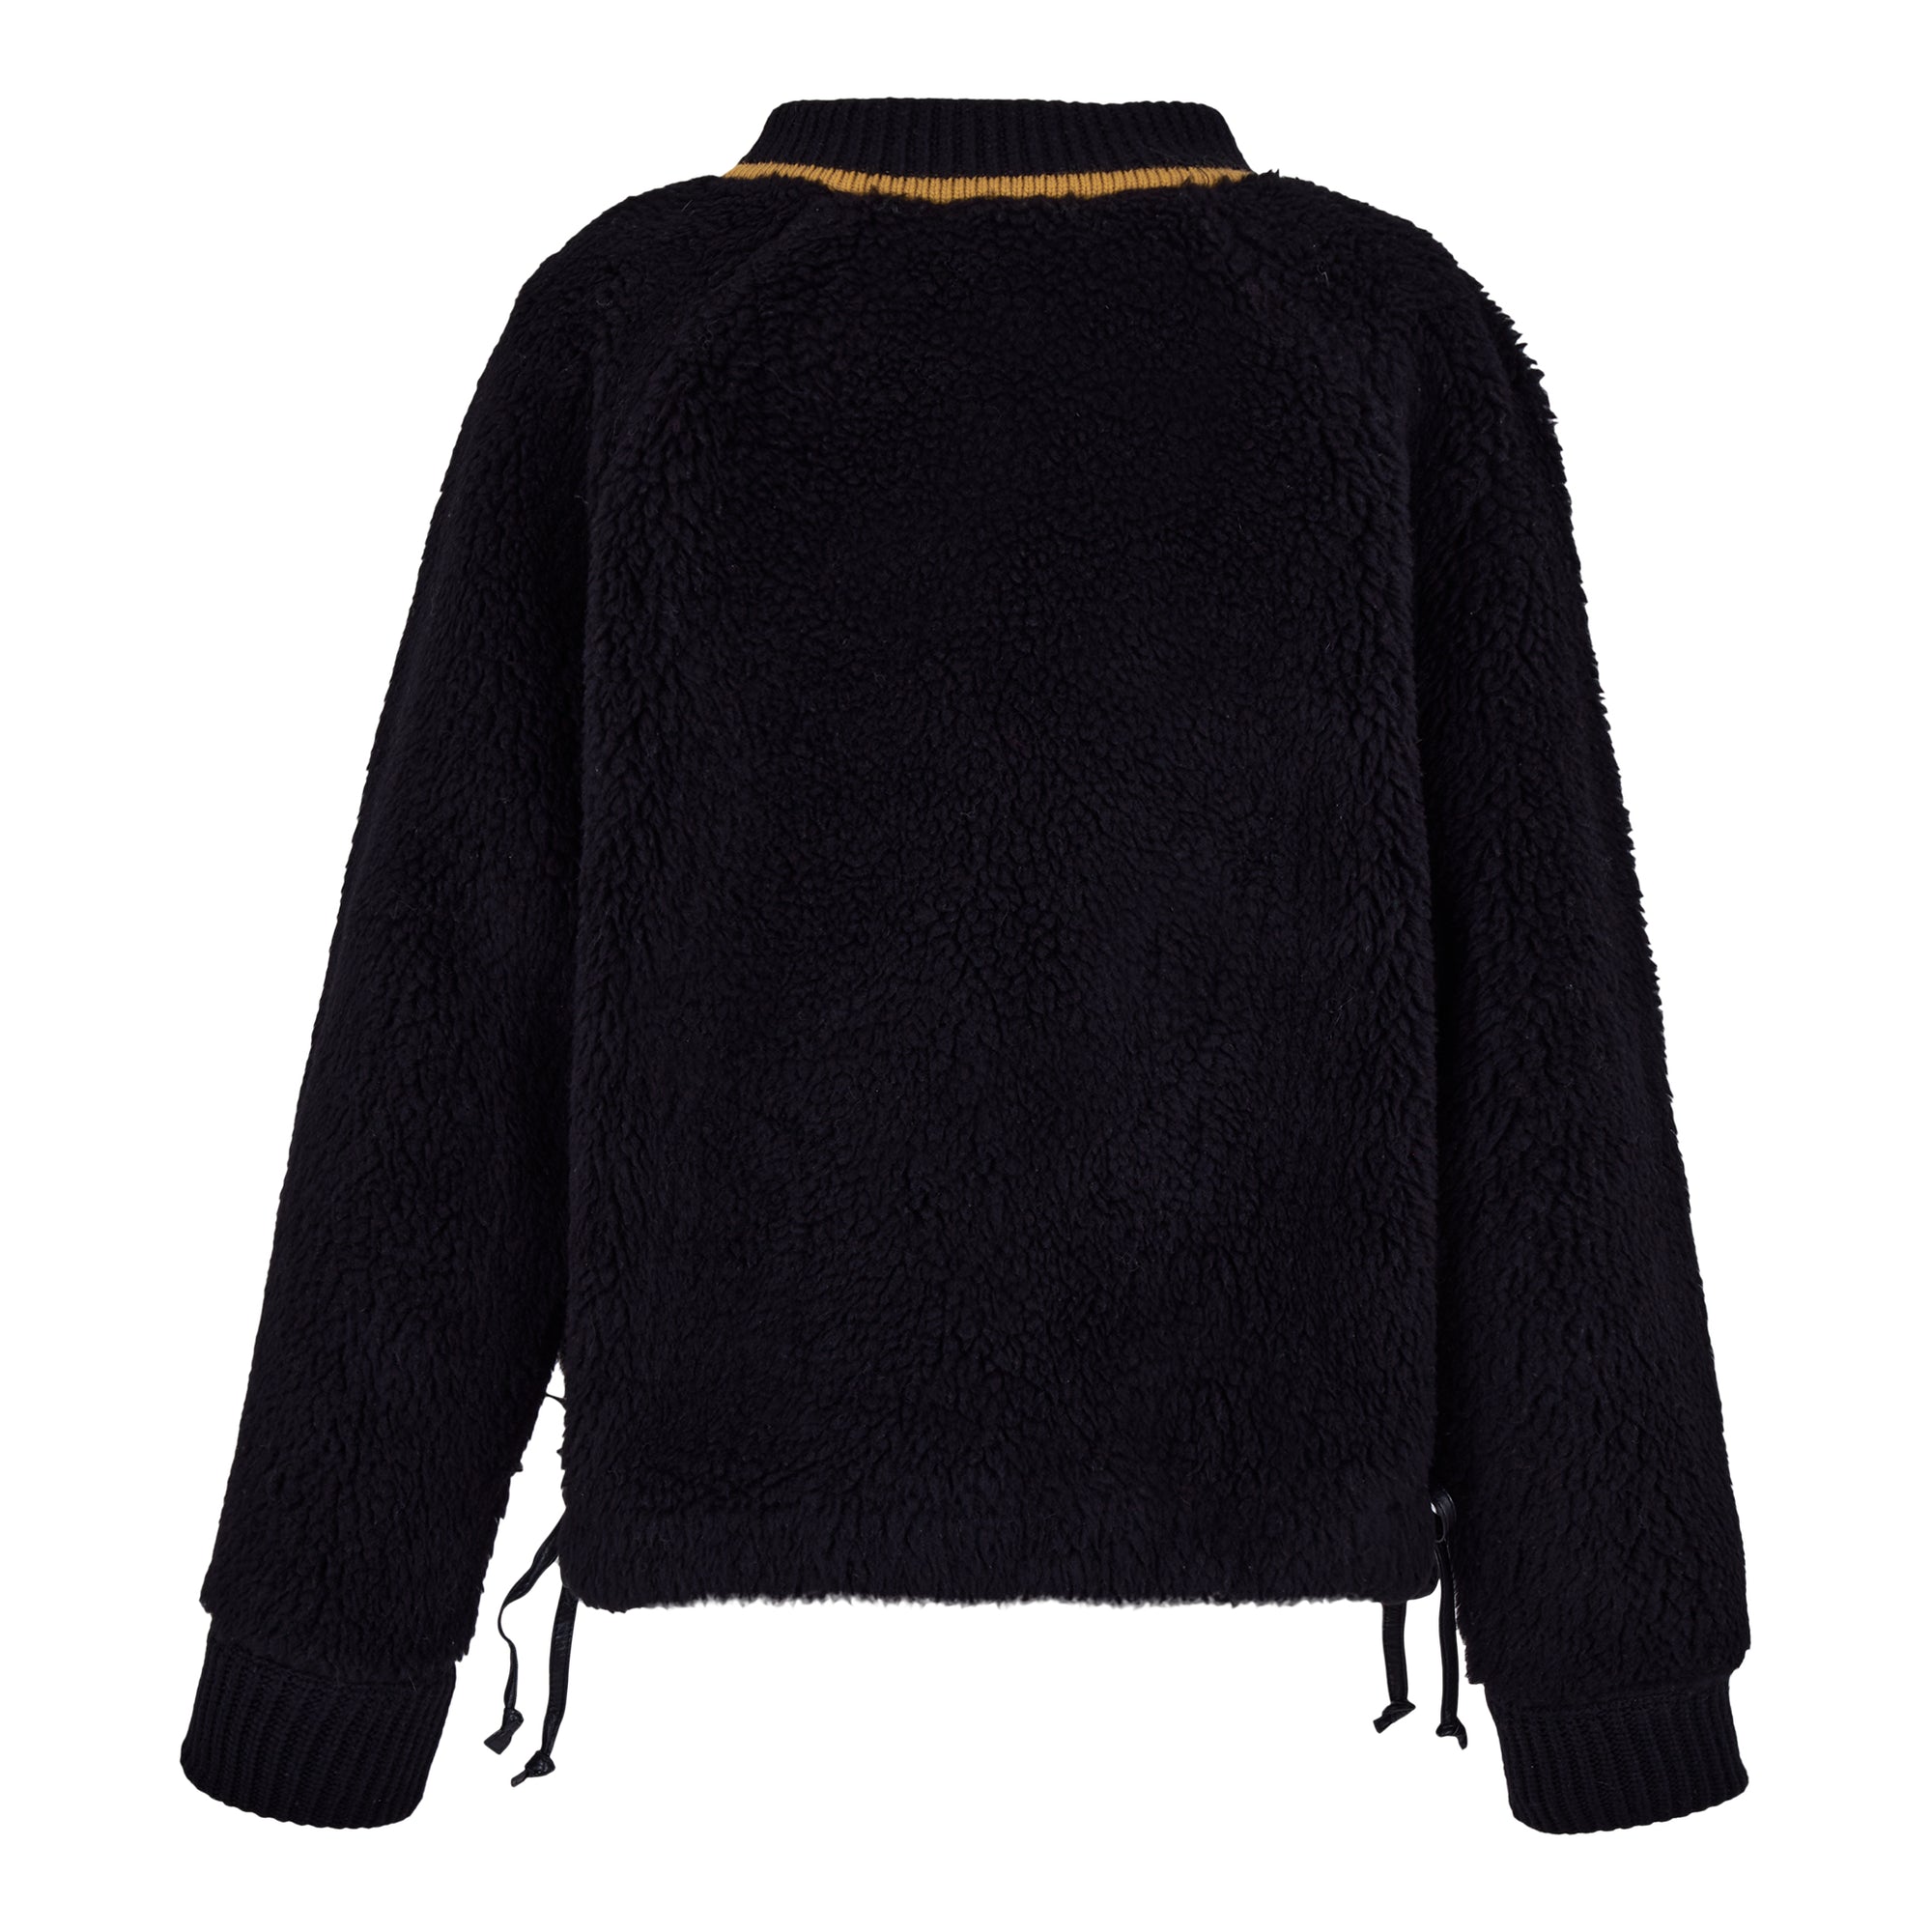 Fendi x Fila Black cropped sweatshirt